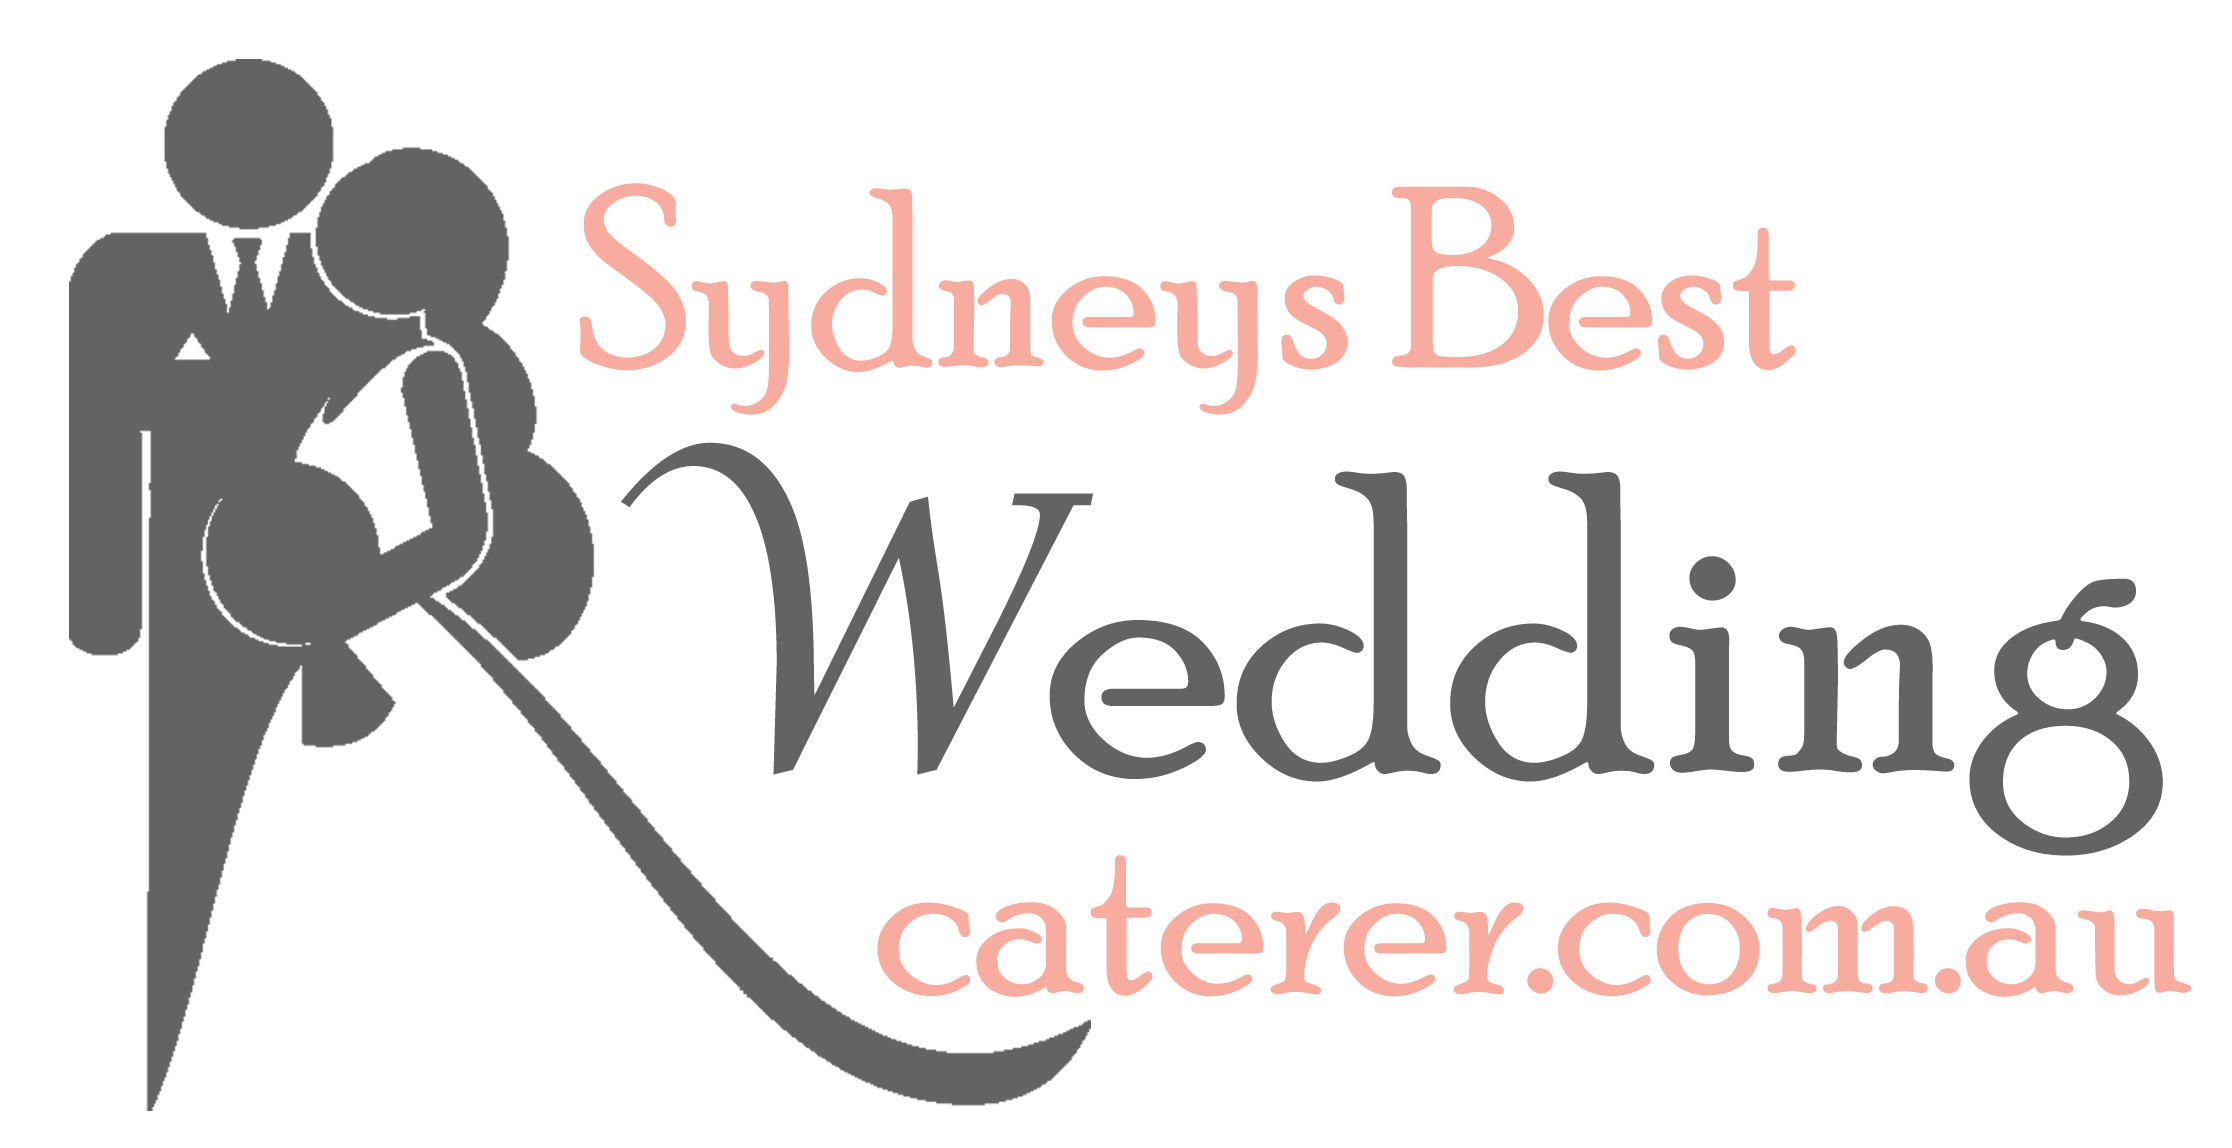 Sydneys Best Wedding Caterer